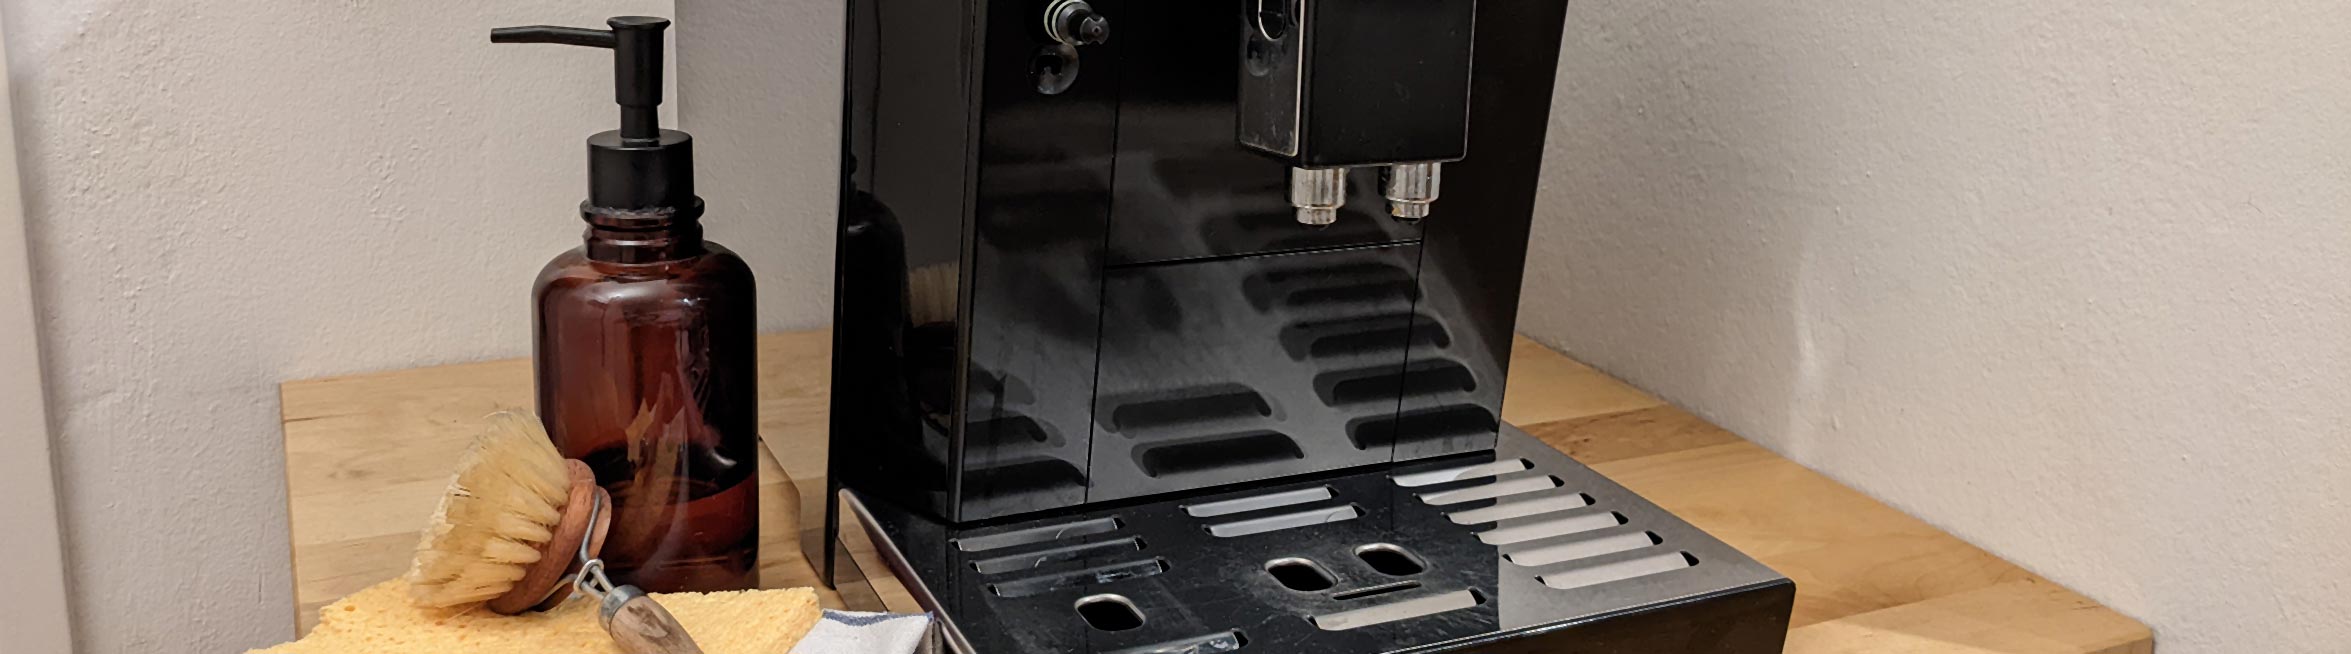 Kaffeevollautomat reinigen » Tipps von earlybird coffee